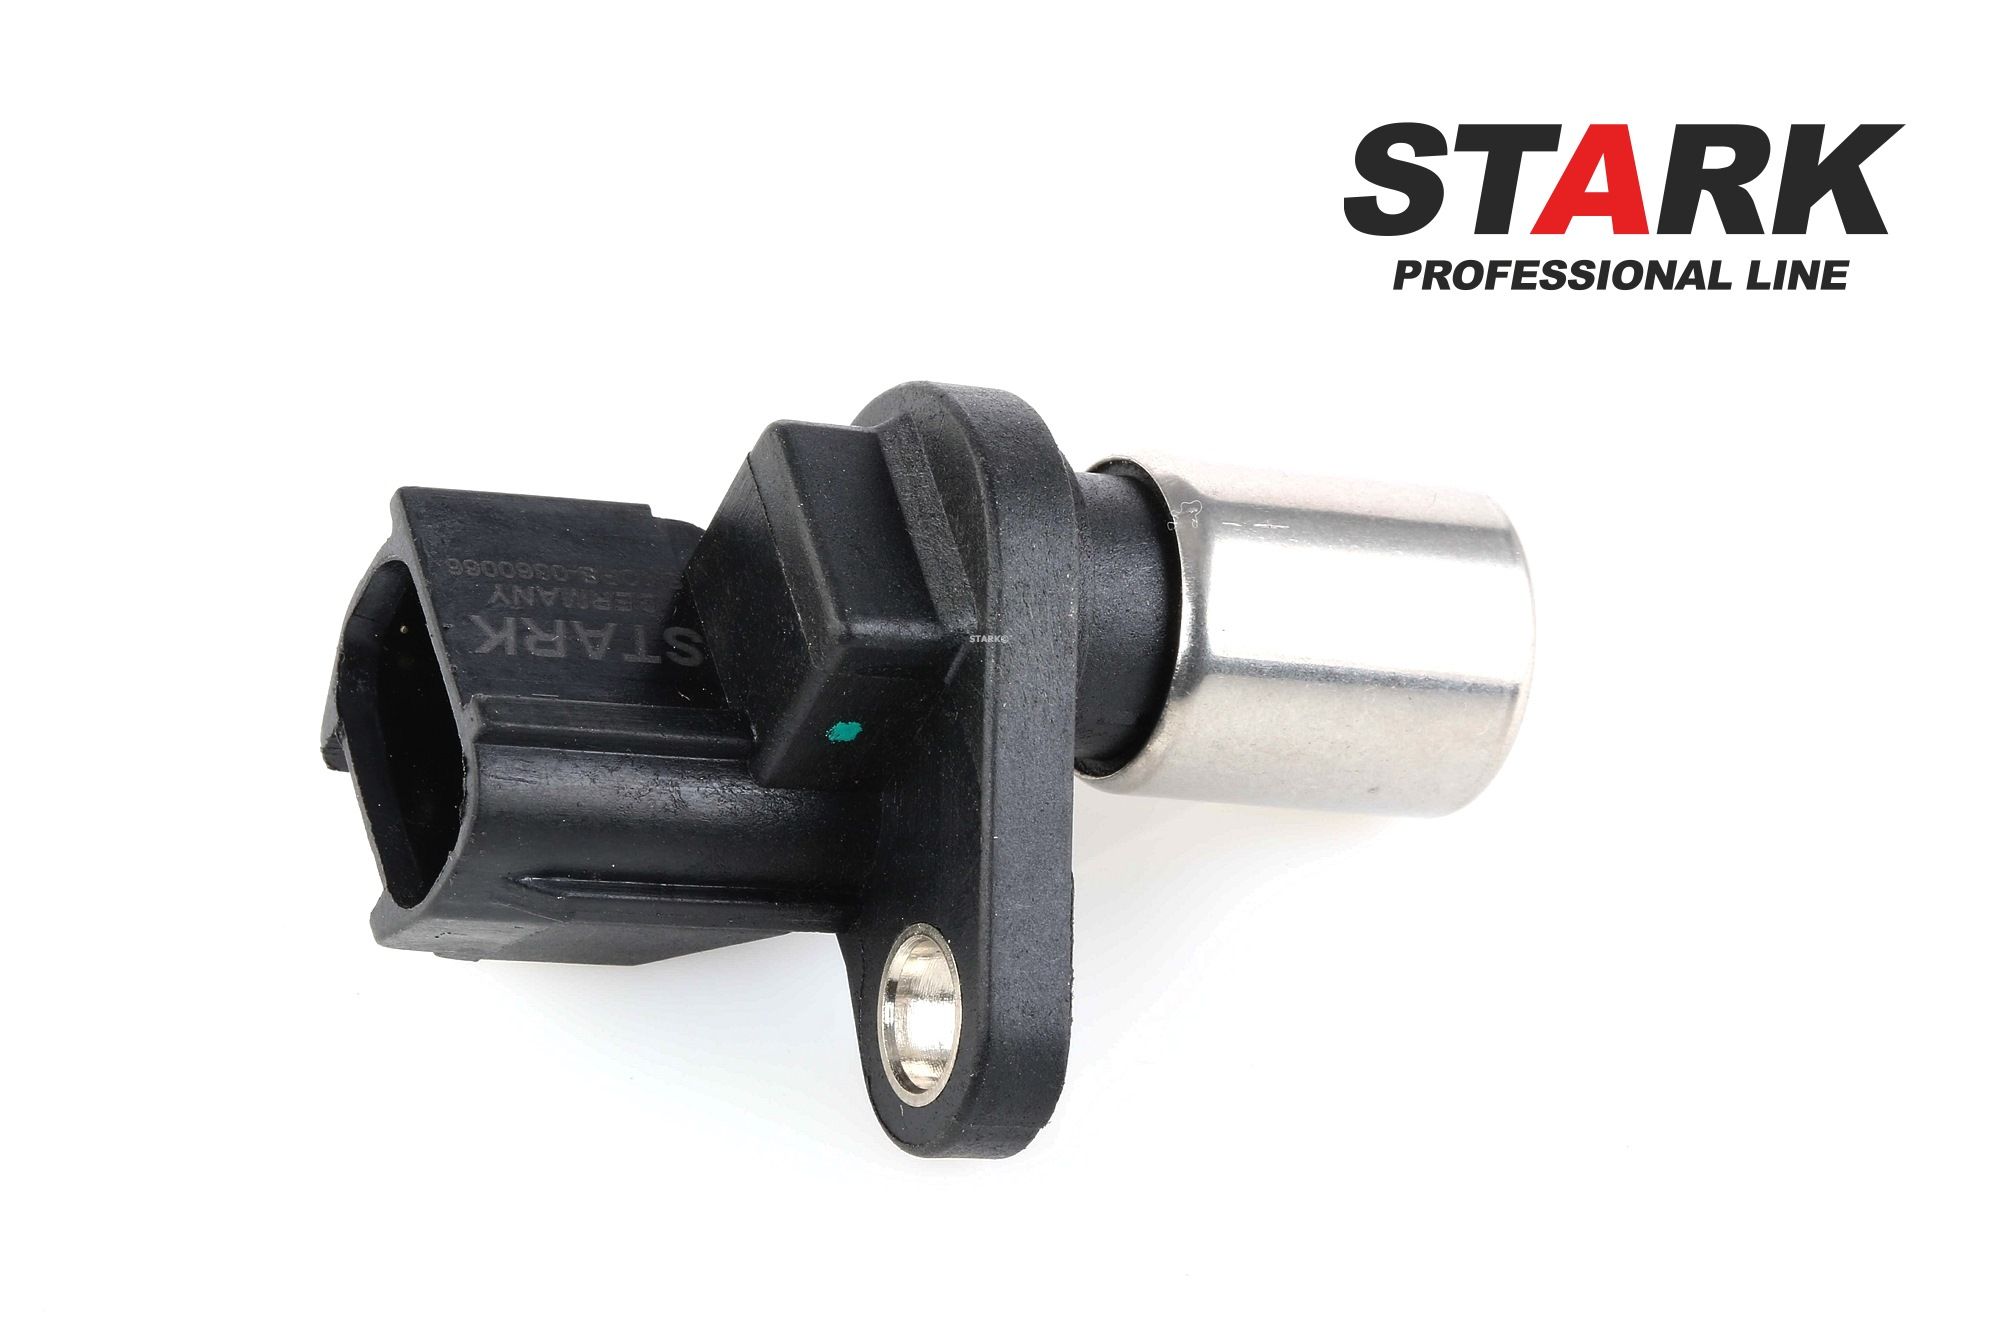 STARK SKCPS-0360066 Crankshaft sensor 2-pin connector, Inductive Sensor, without cable